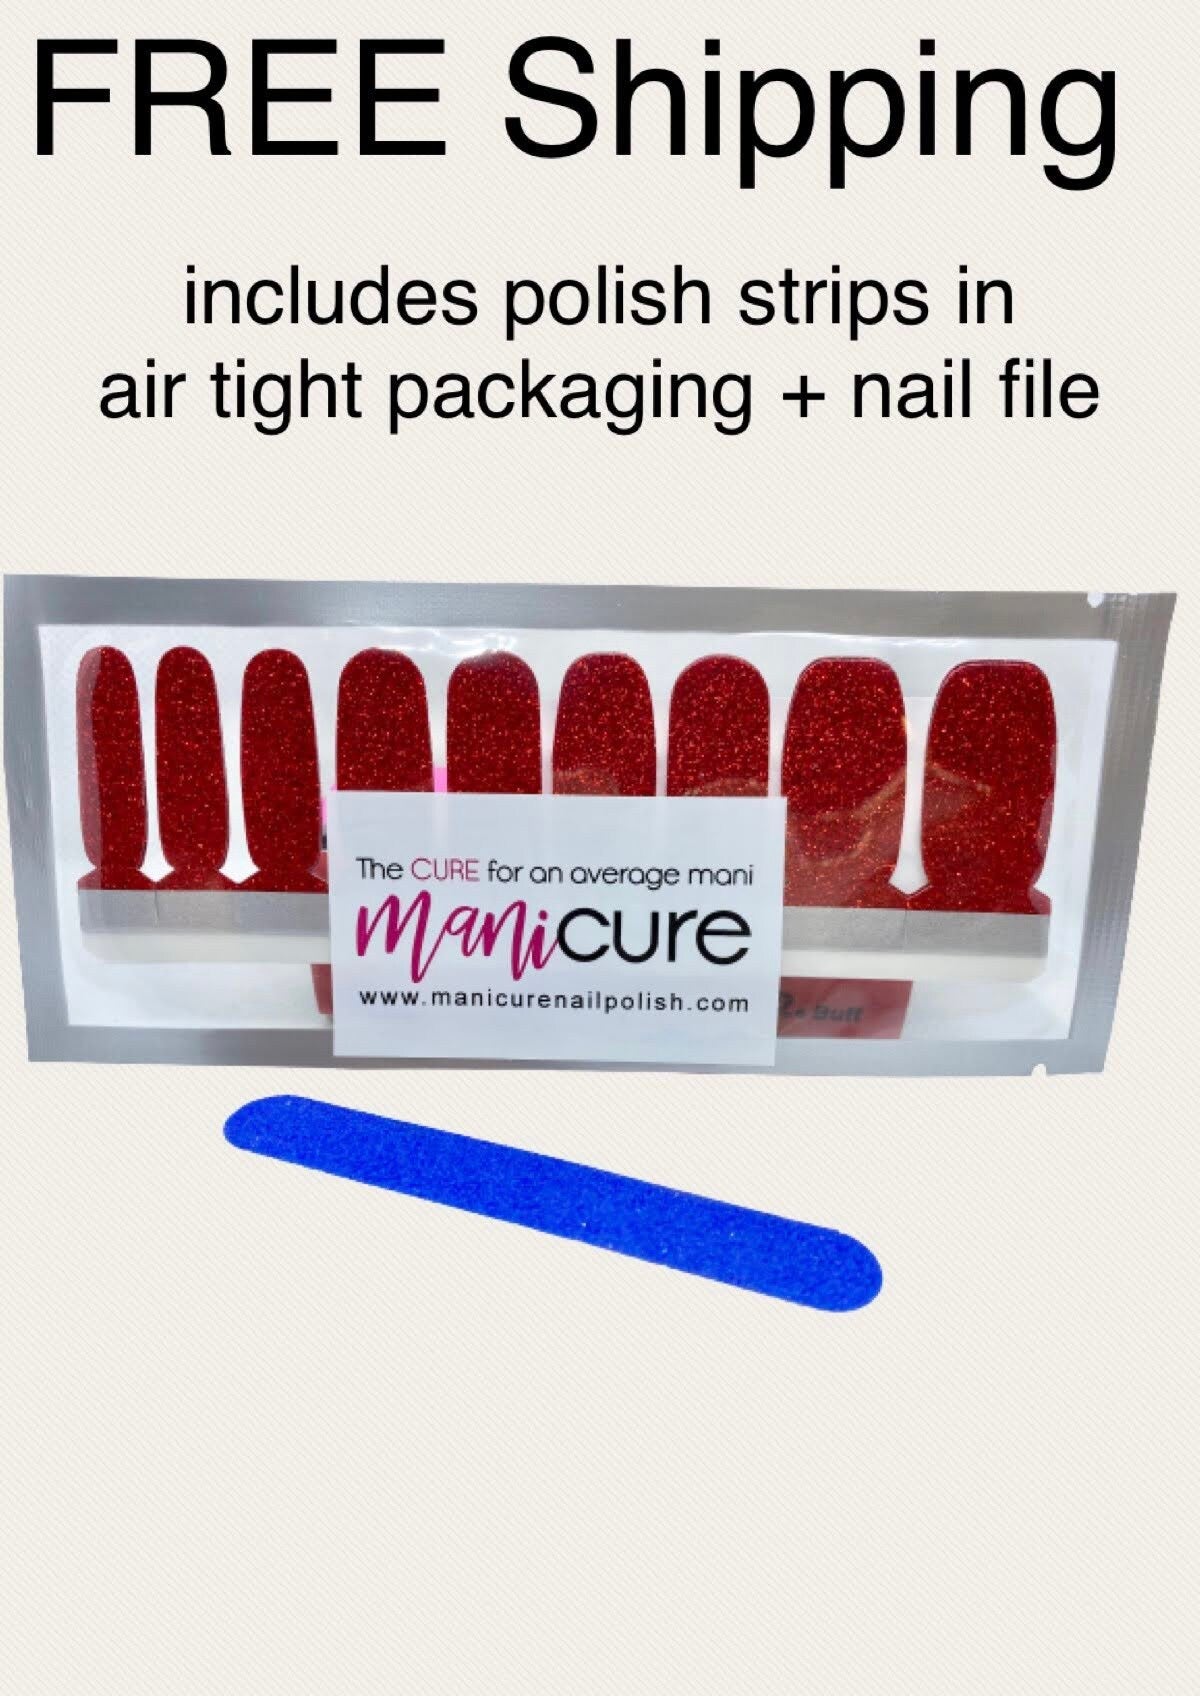 Coral Solid Finish, ManiCURE  Real Nail Polish Strips, Dry Nail Polish, Nail Wraps, Stickers, Long Lasting, Non Toxic - manicurenailpolish